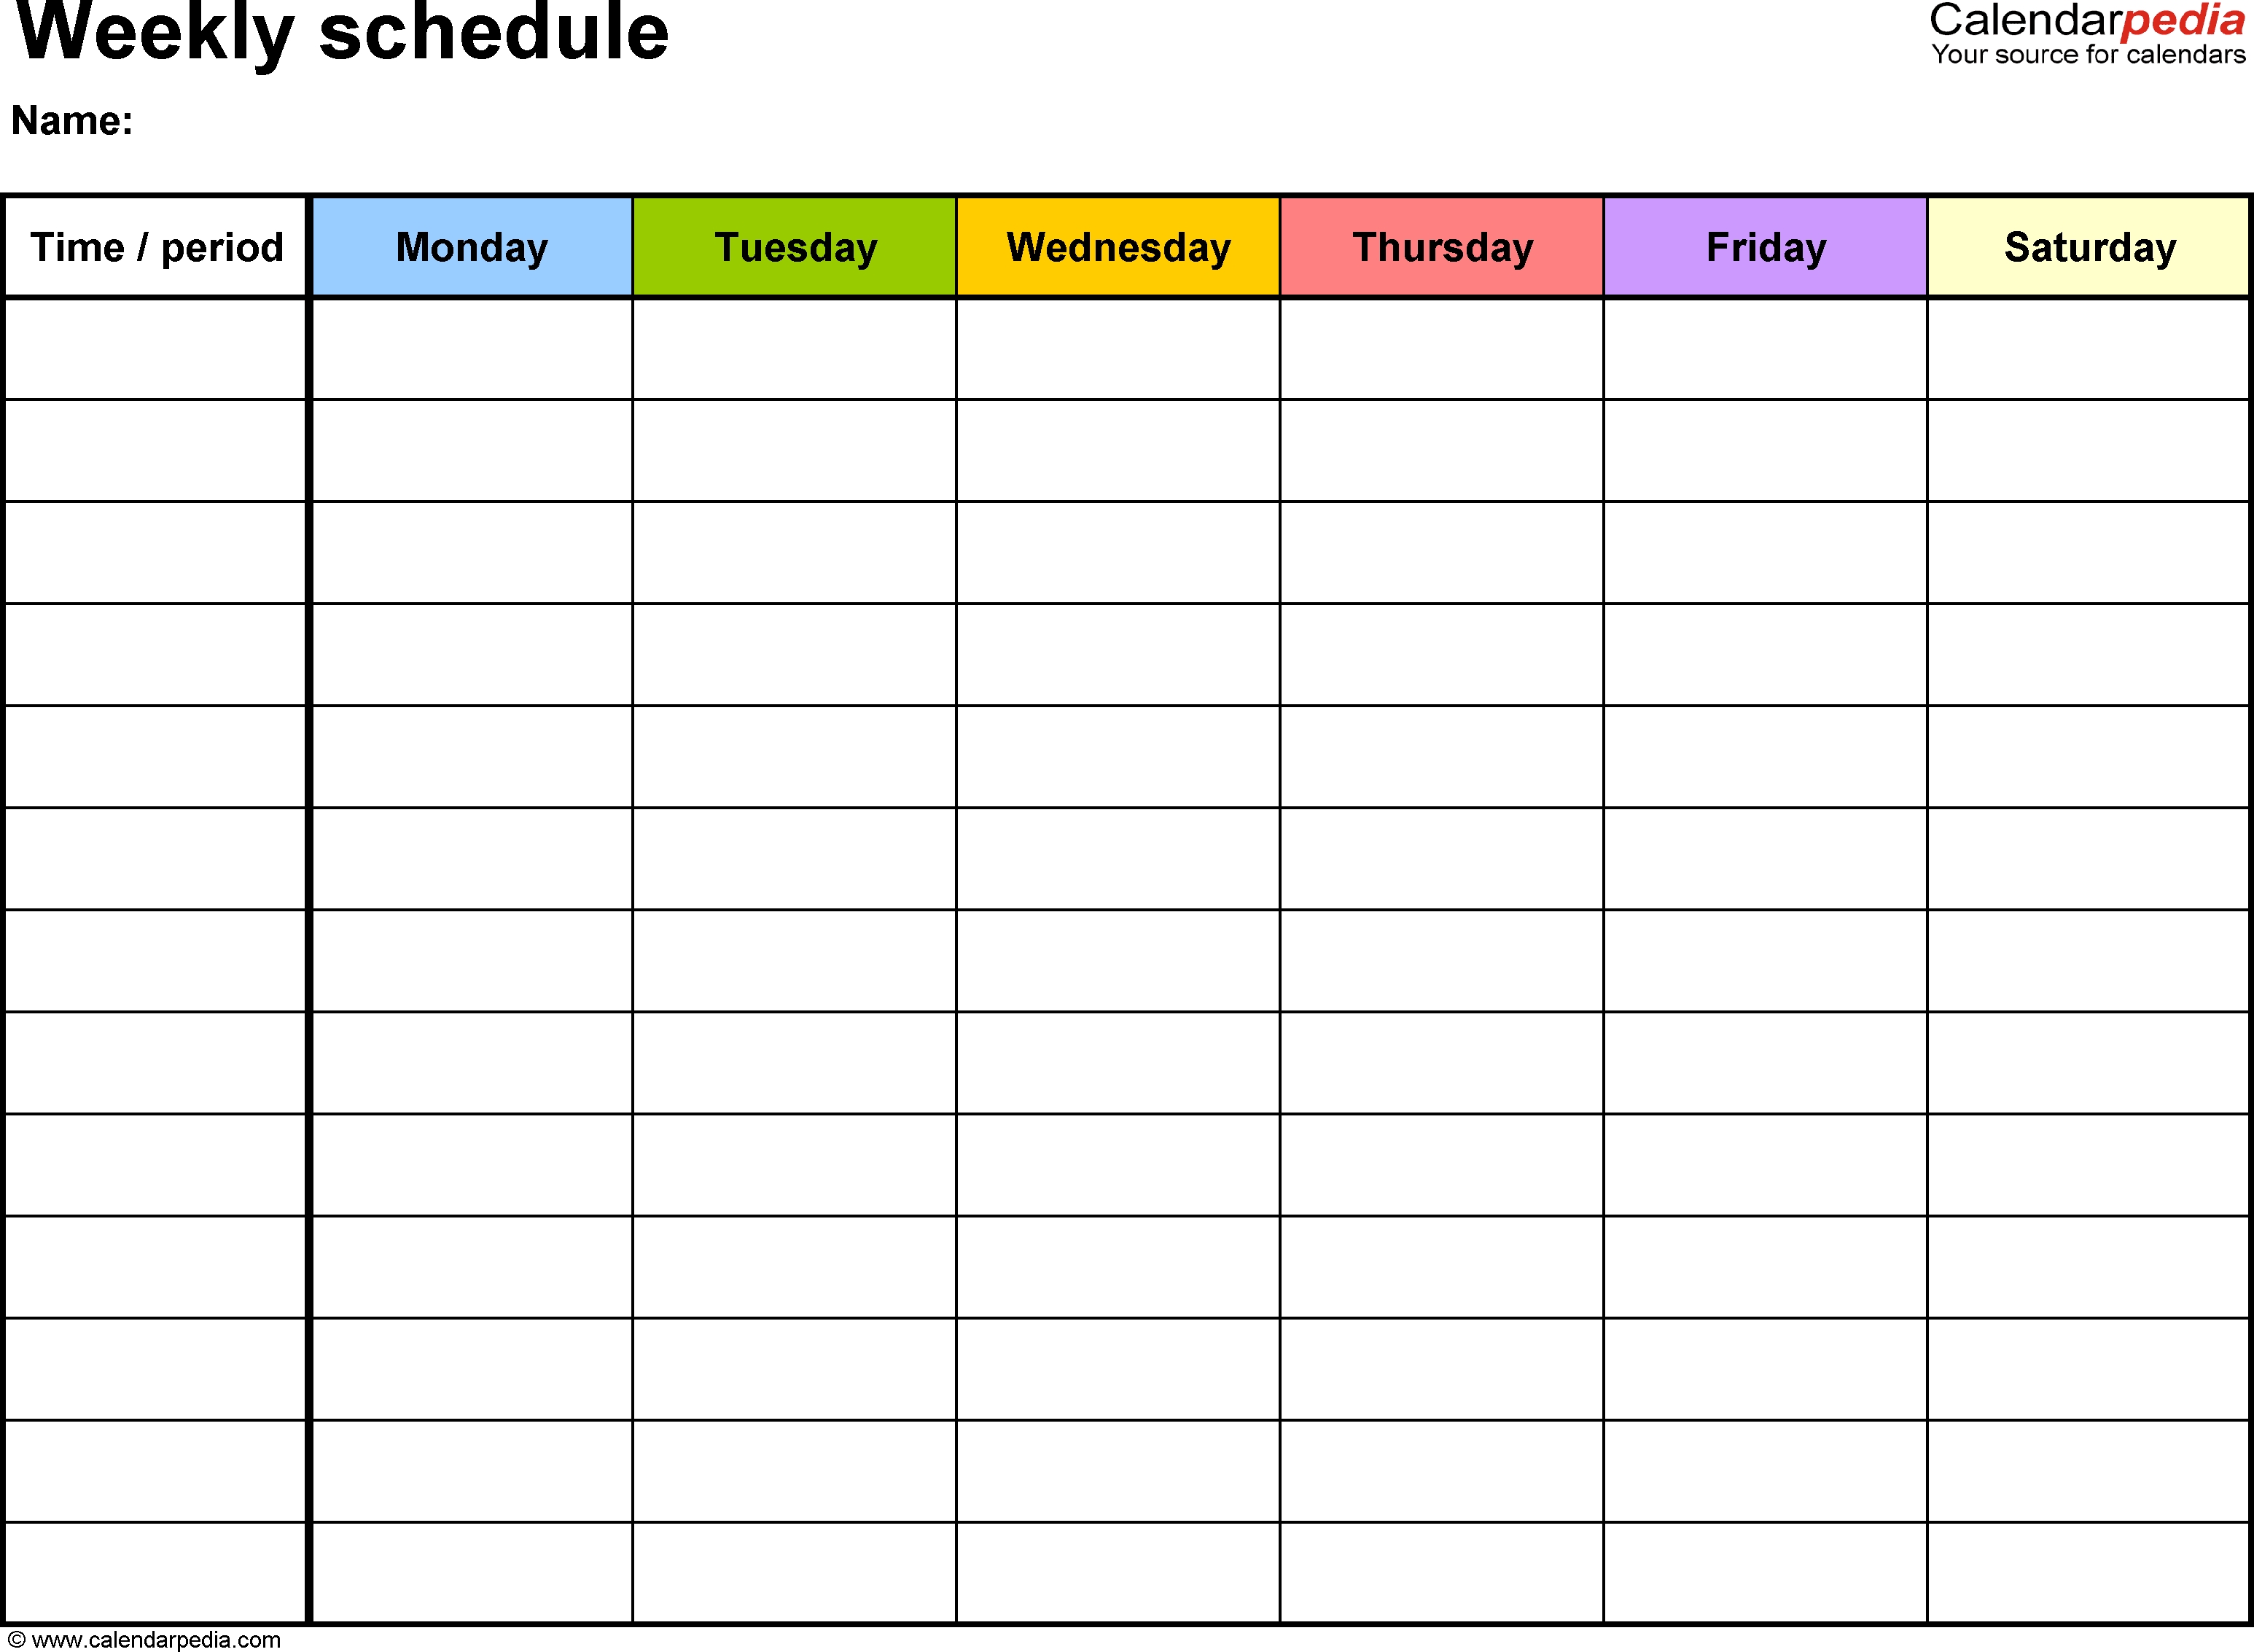 Free Weekly Schedule Templates For Word - 18 Templates in 6 Week Calendar Template Printable